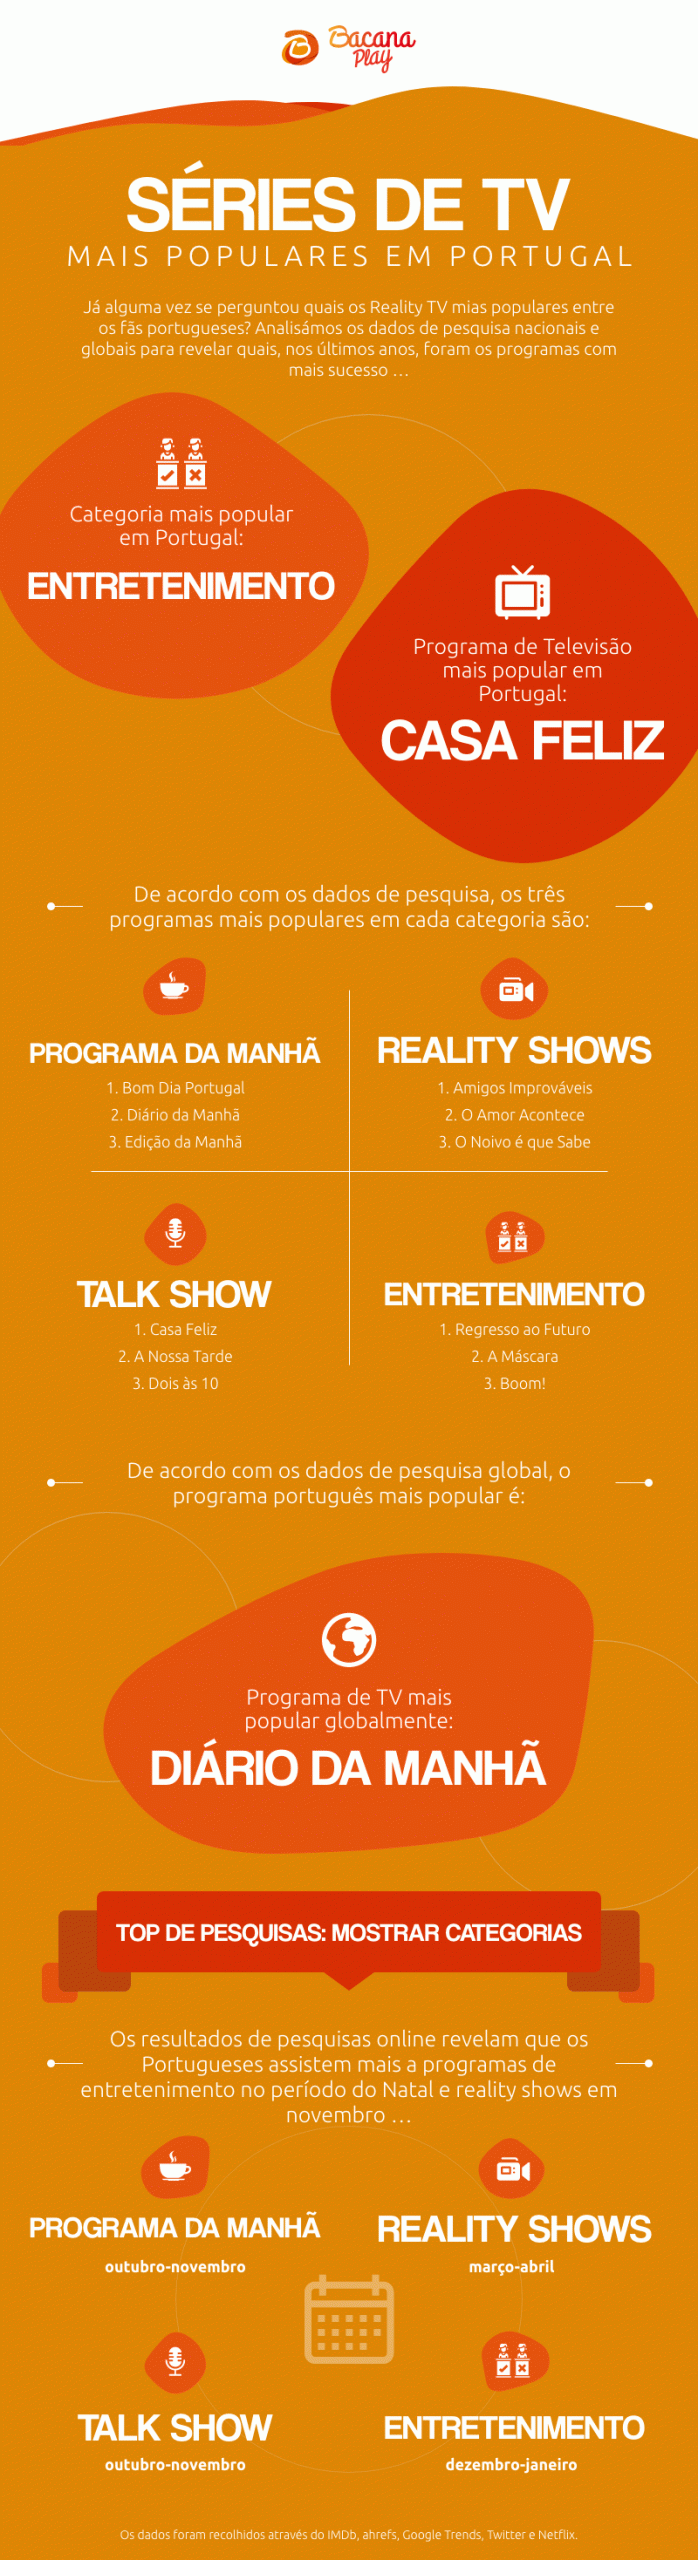 Most Popular Portuguese TV Series